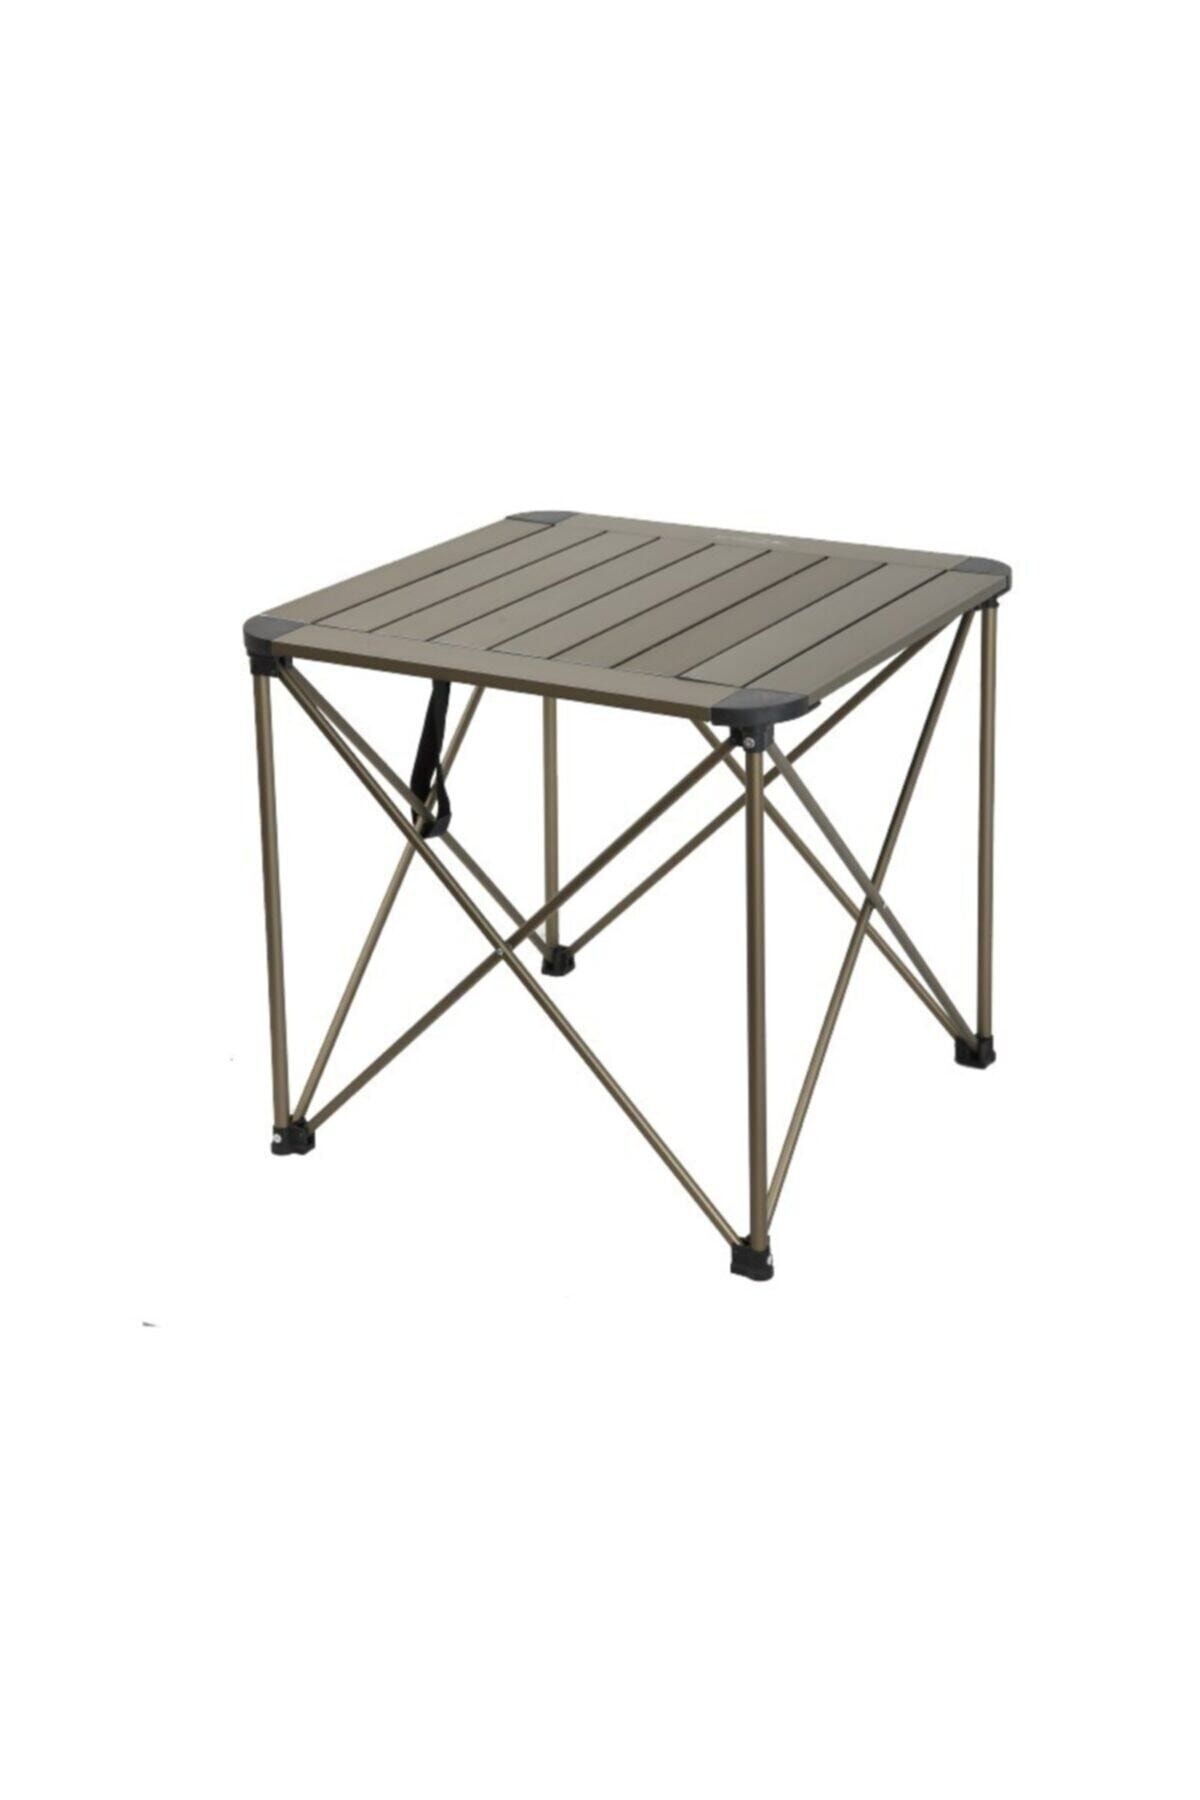 Nurgaz Campout Alüminyum Kamp Masası 50x50 cm Küçük Boy